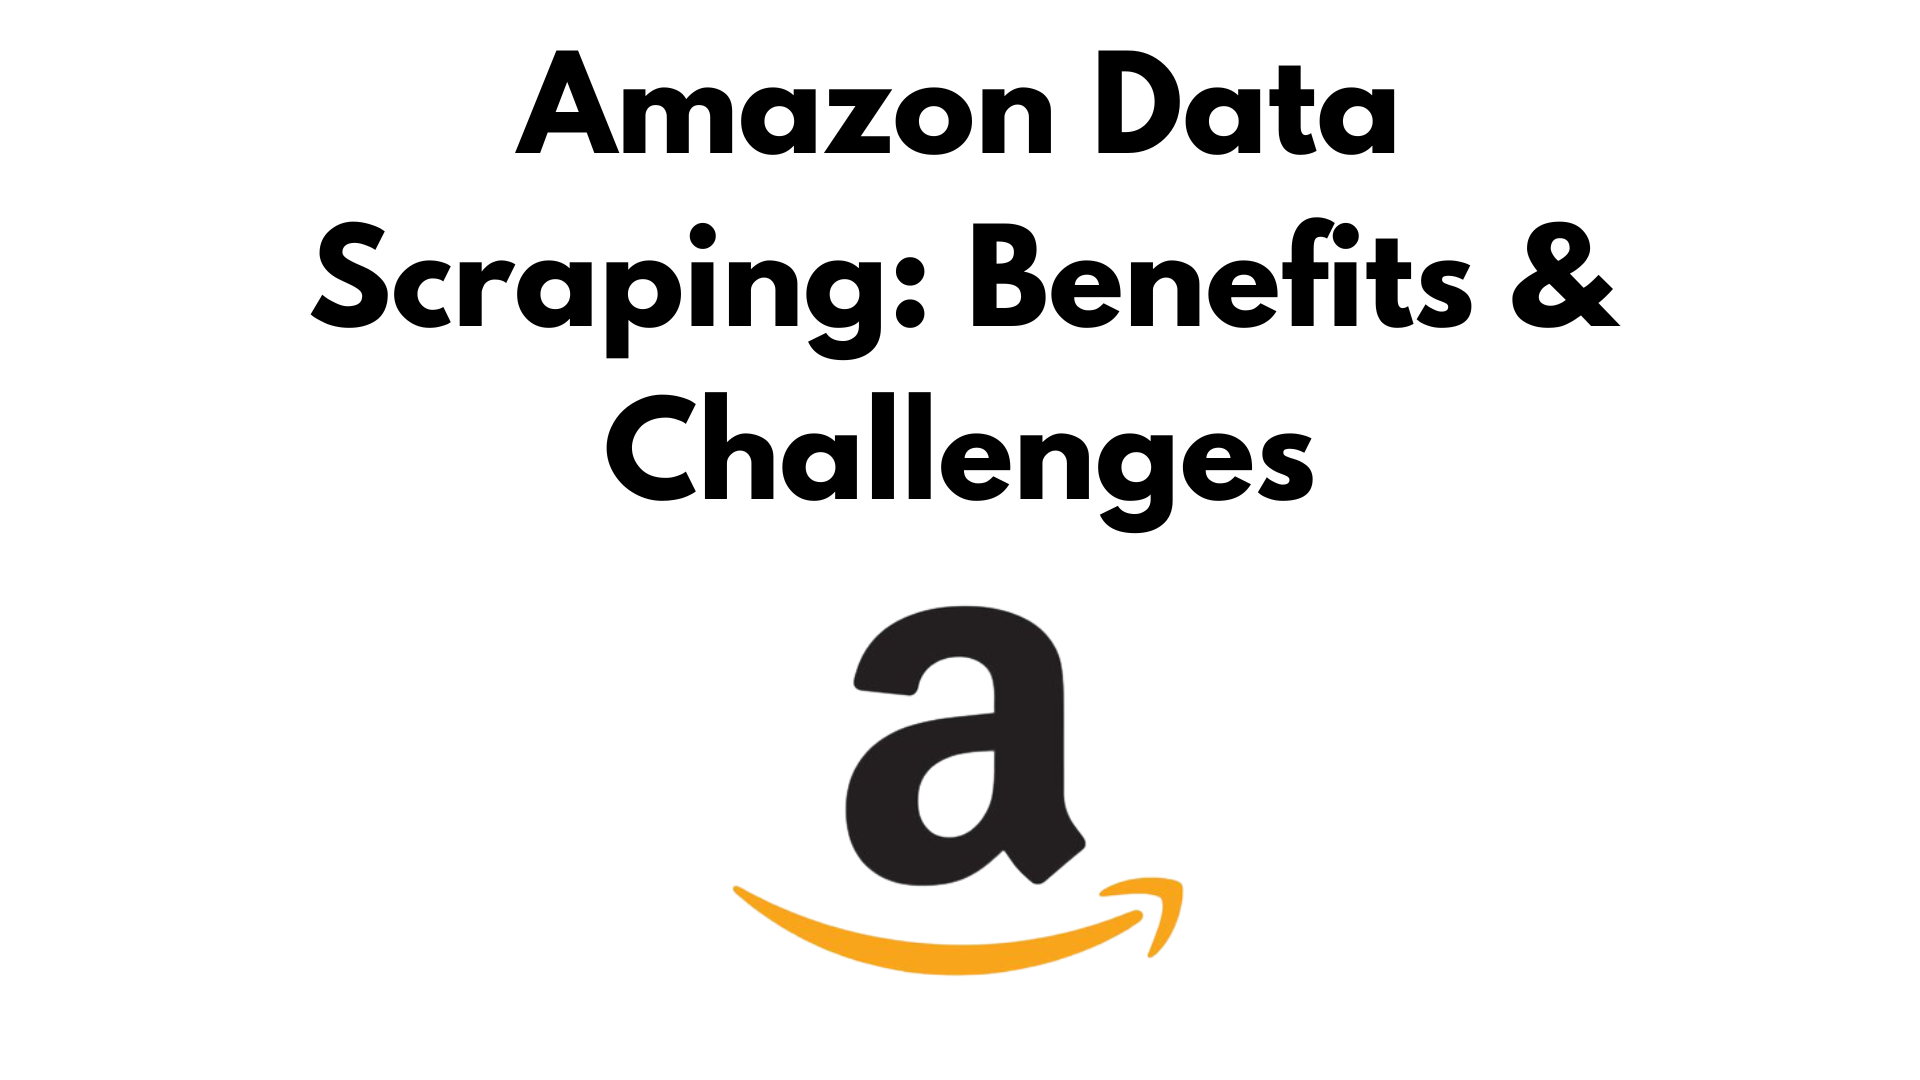 Amazon Data Scraping: Benefits & Challenges